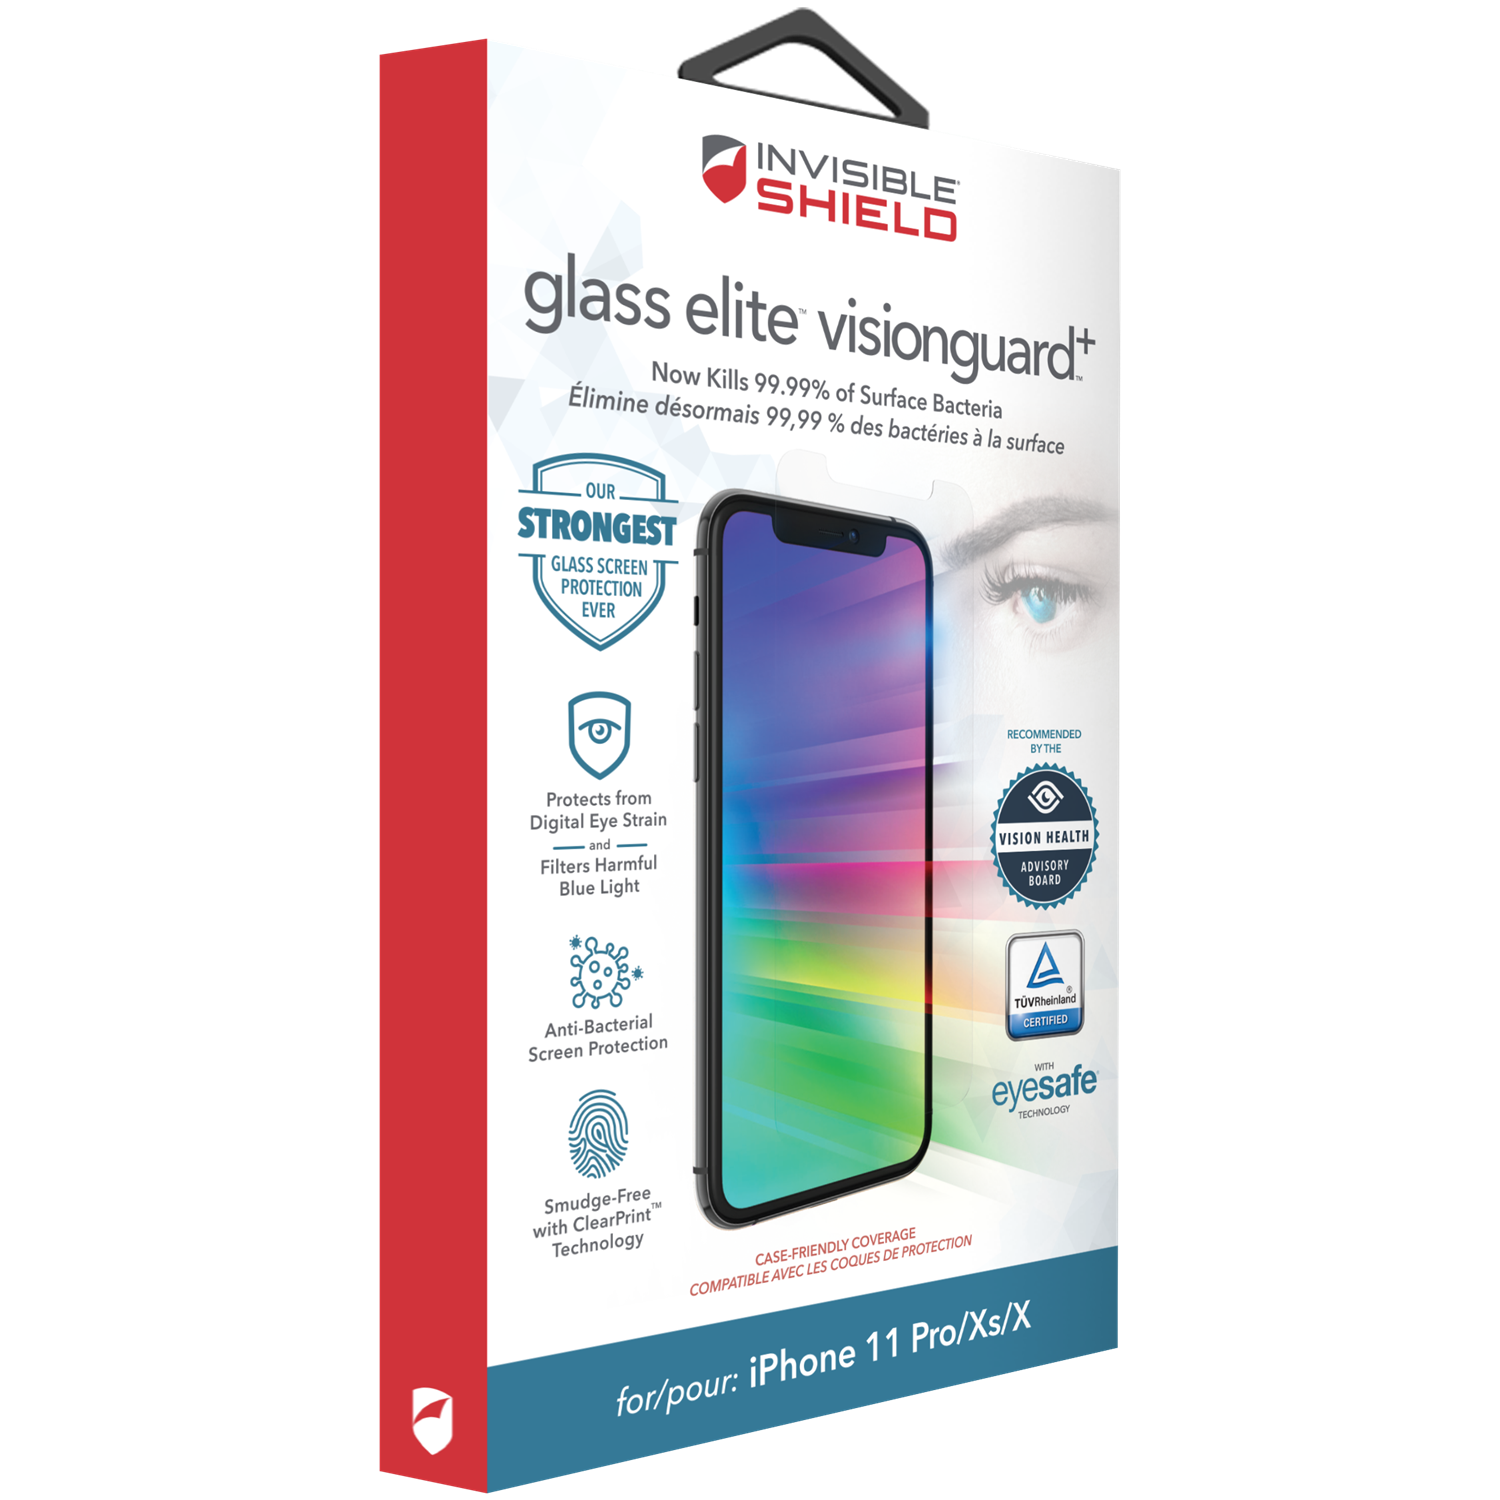 InvisibleShield Glass Elite Visionguard+ iPhone X/XS/11 Pro